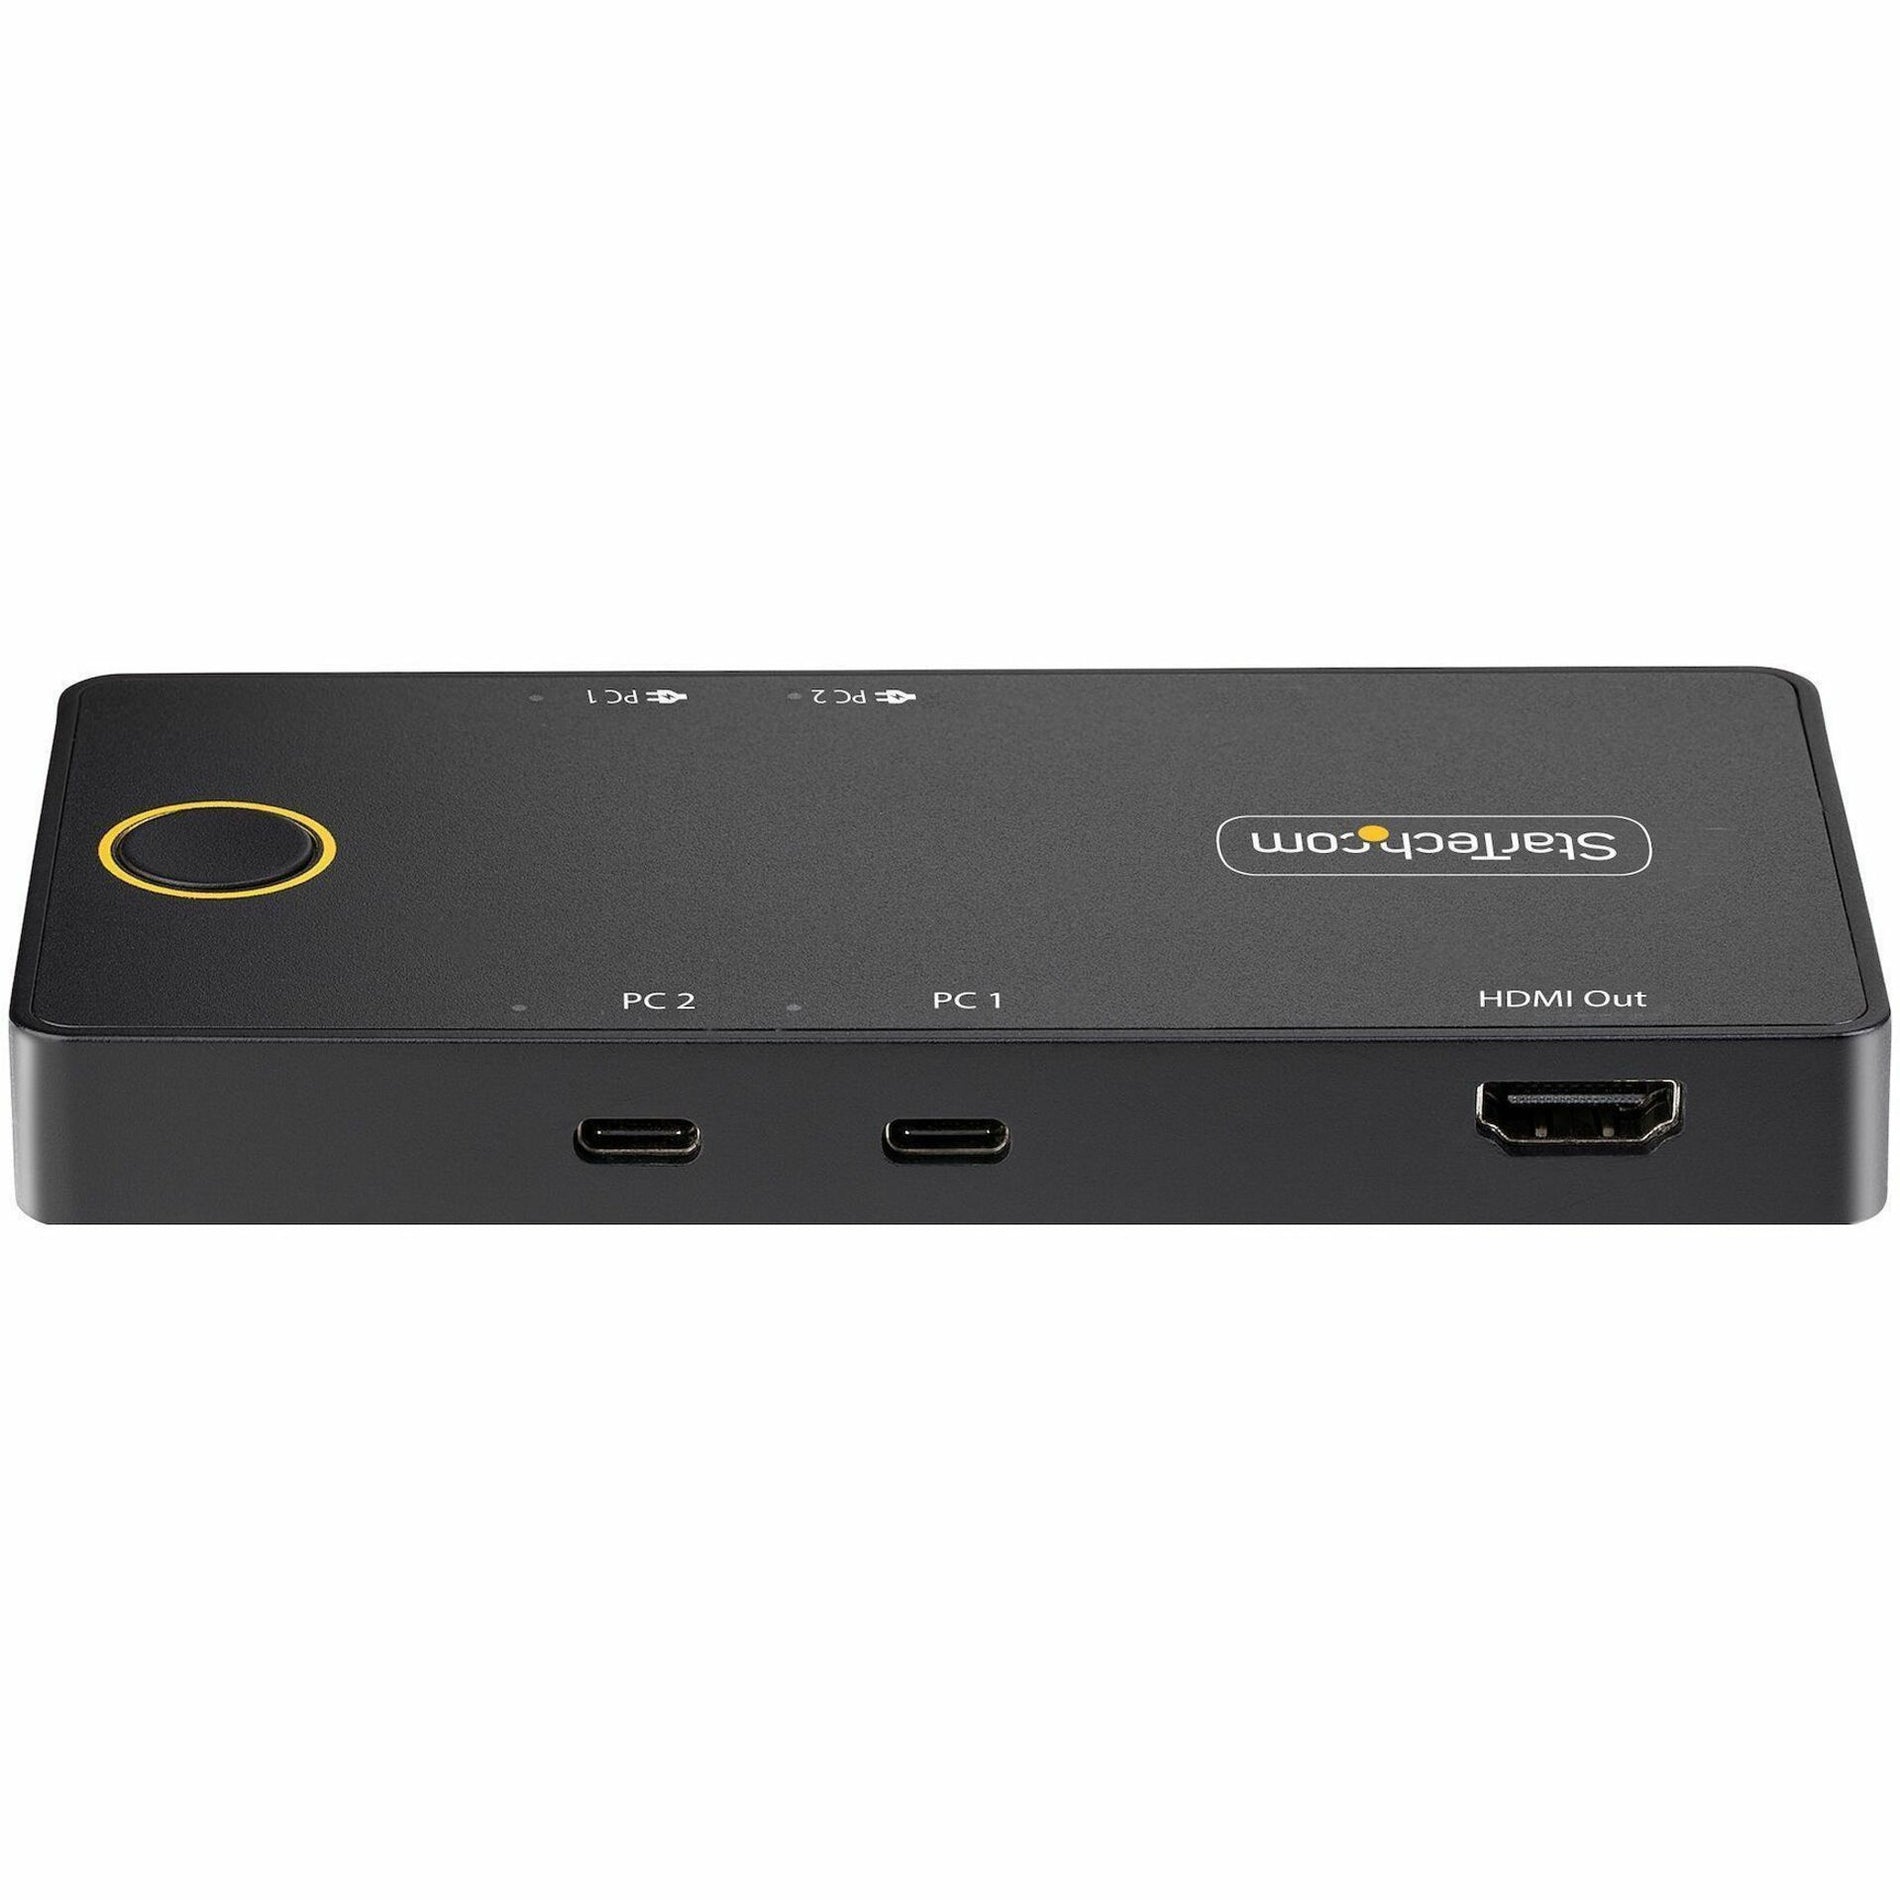 StarTech.com C2-H46-UC2-PD-KVM KVM Switchbox, 4K Video, 2-Year Warranty, USB, HDMI, 6 USB Ports, 1 HDMI Port